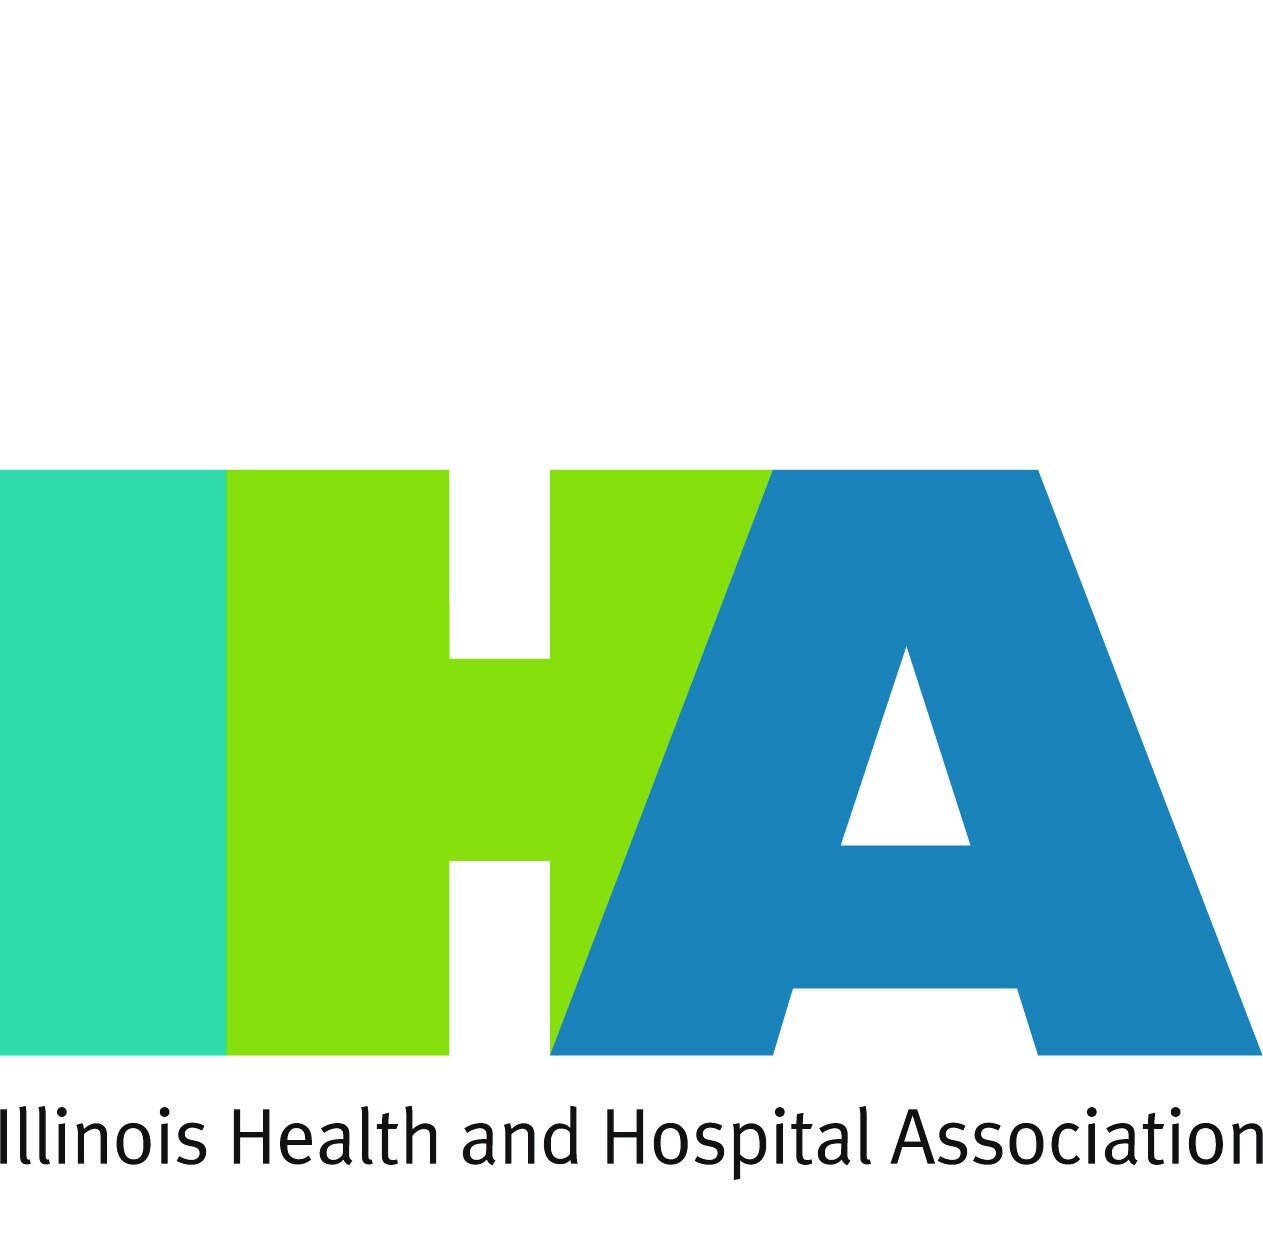 Illinois Health and Hospital Association.jpg